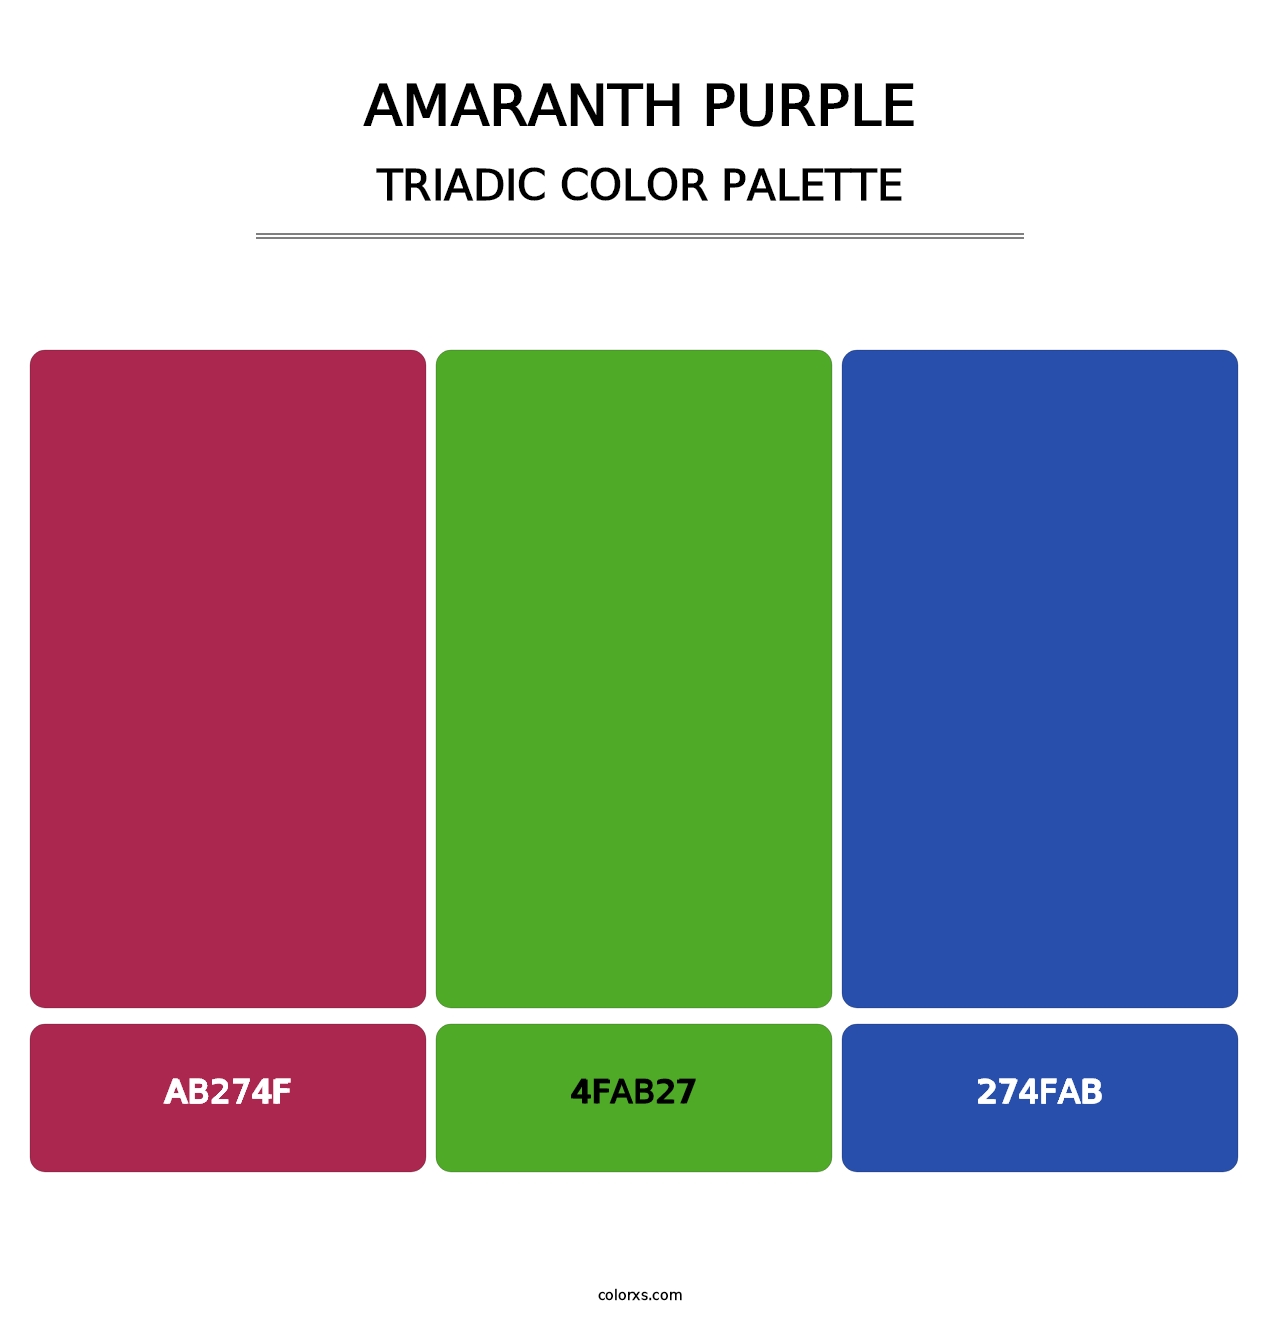 Amaranth Purple - Triadic Color Palette